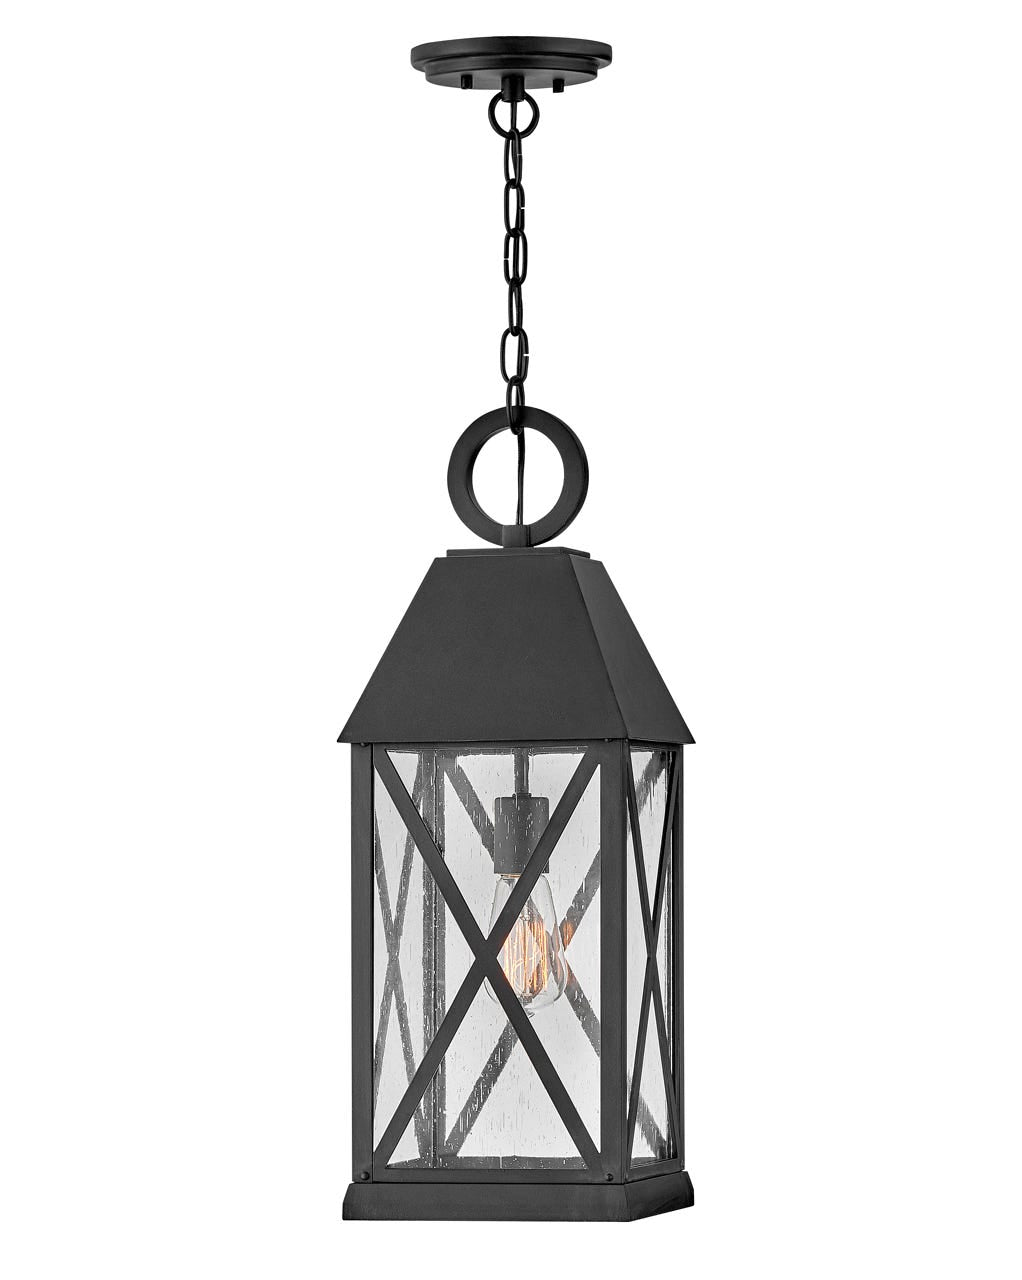 OUTDOOR BRIAR Hanging Lantern Outdoor Light Fixture l Hanging Hinkley Museum Black 8.0x8.0x23.0 